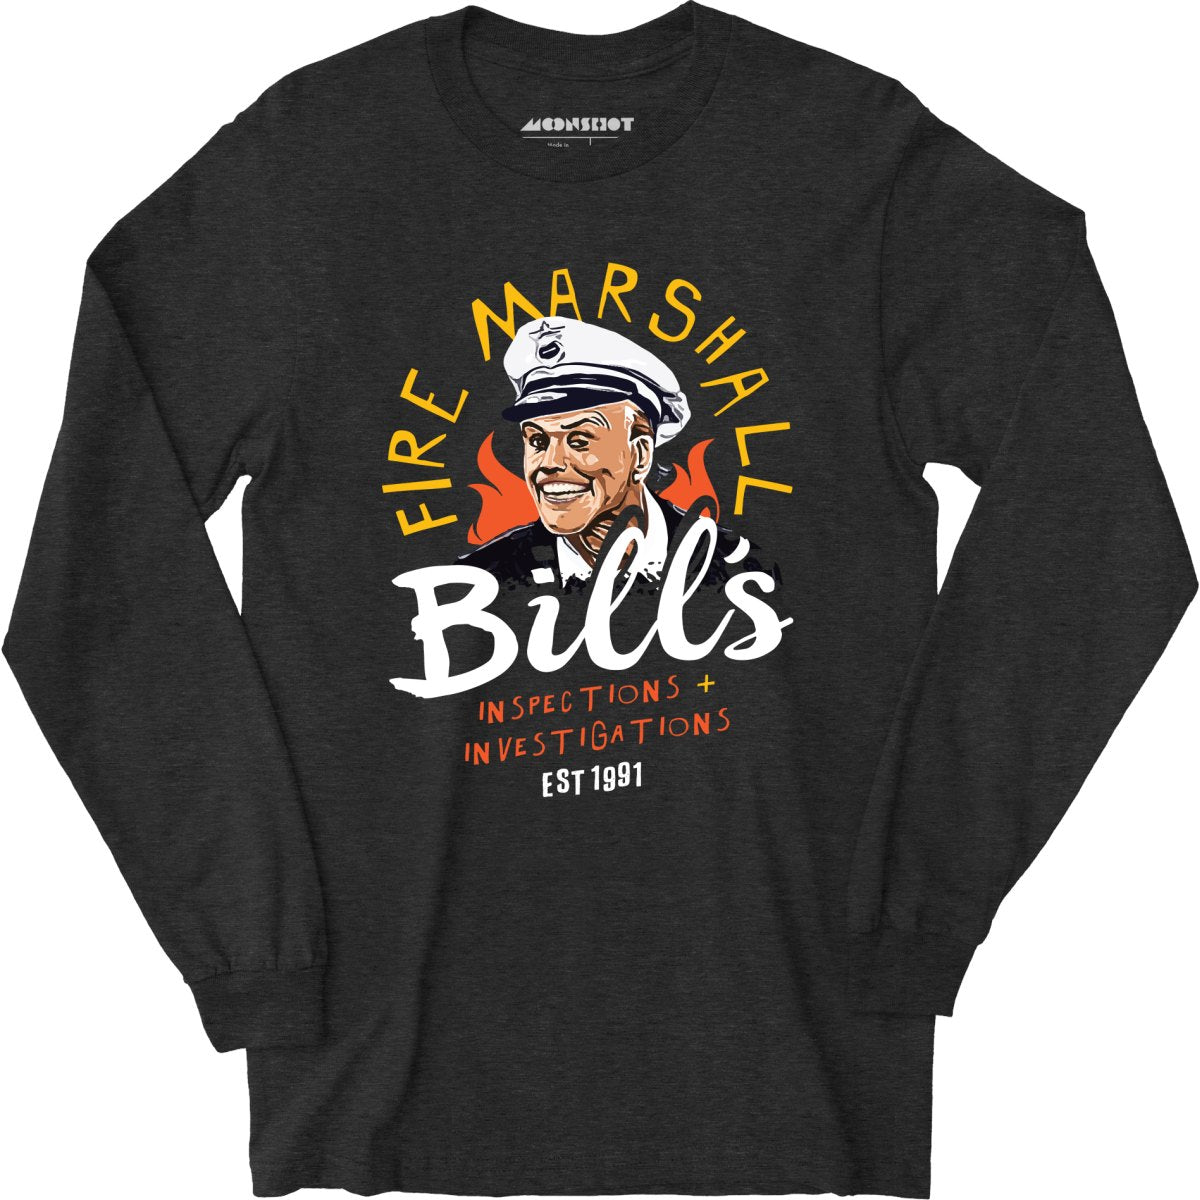 Fire Marshall Bill's Inspections & Investigations - Long Sleeve T-Shirt